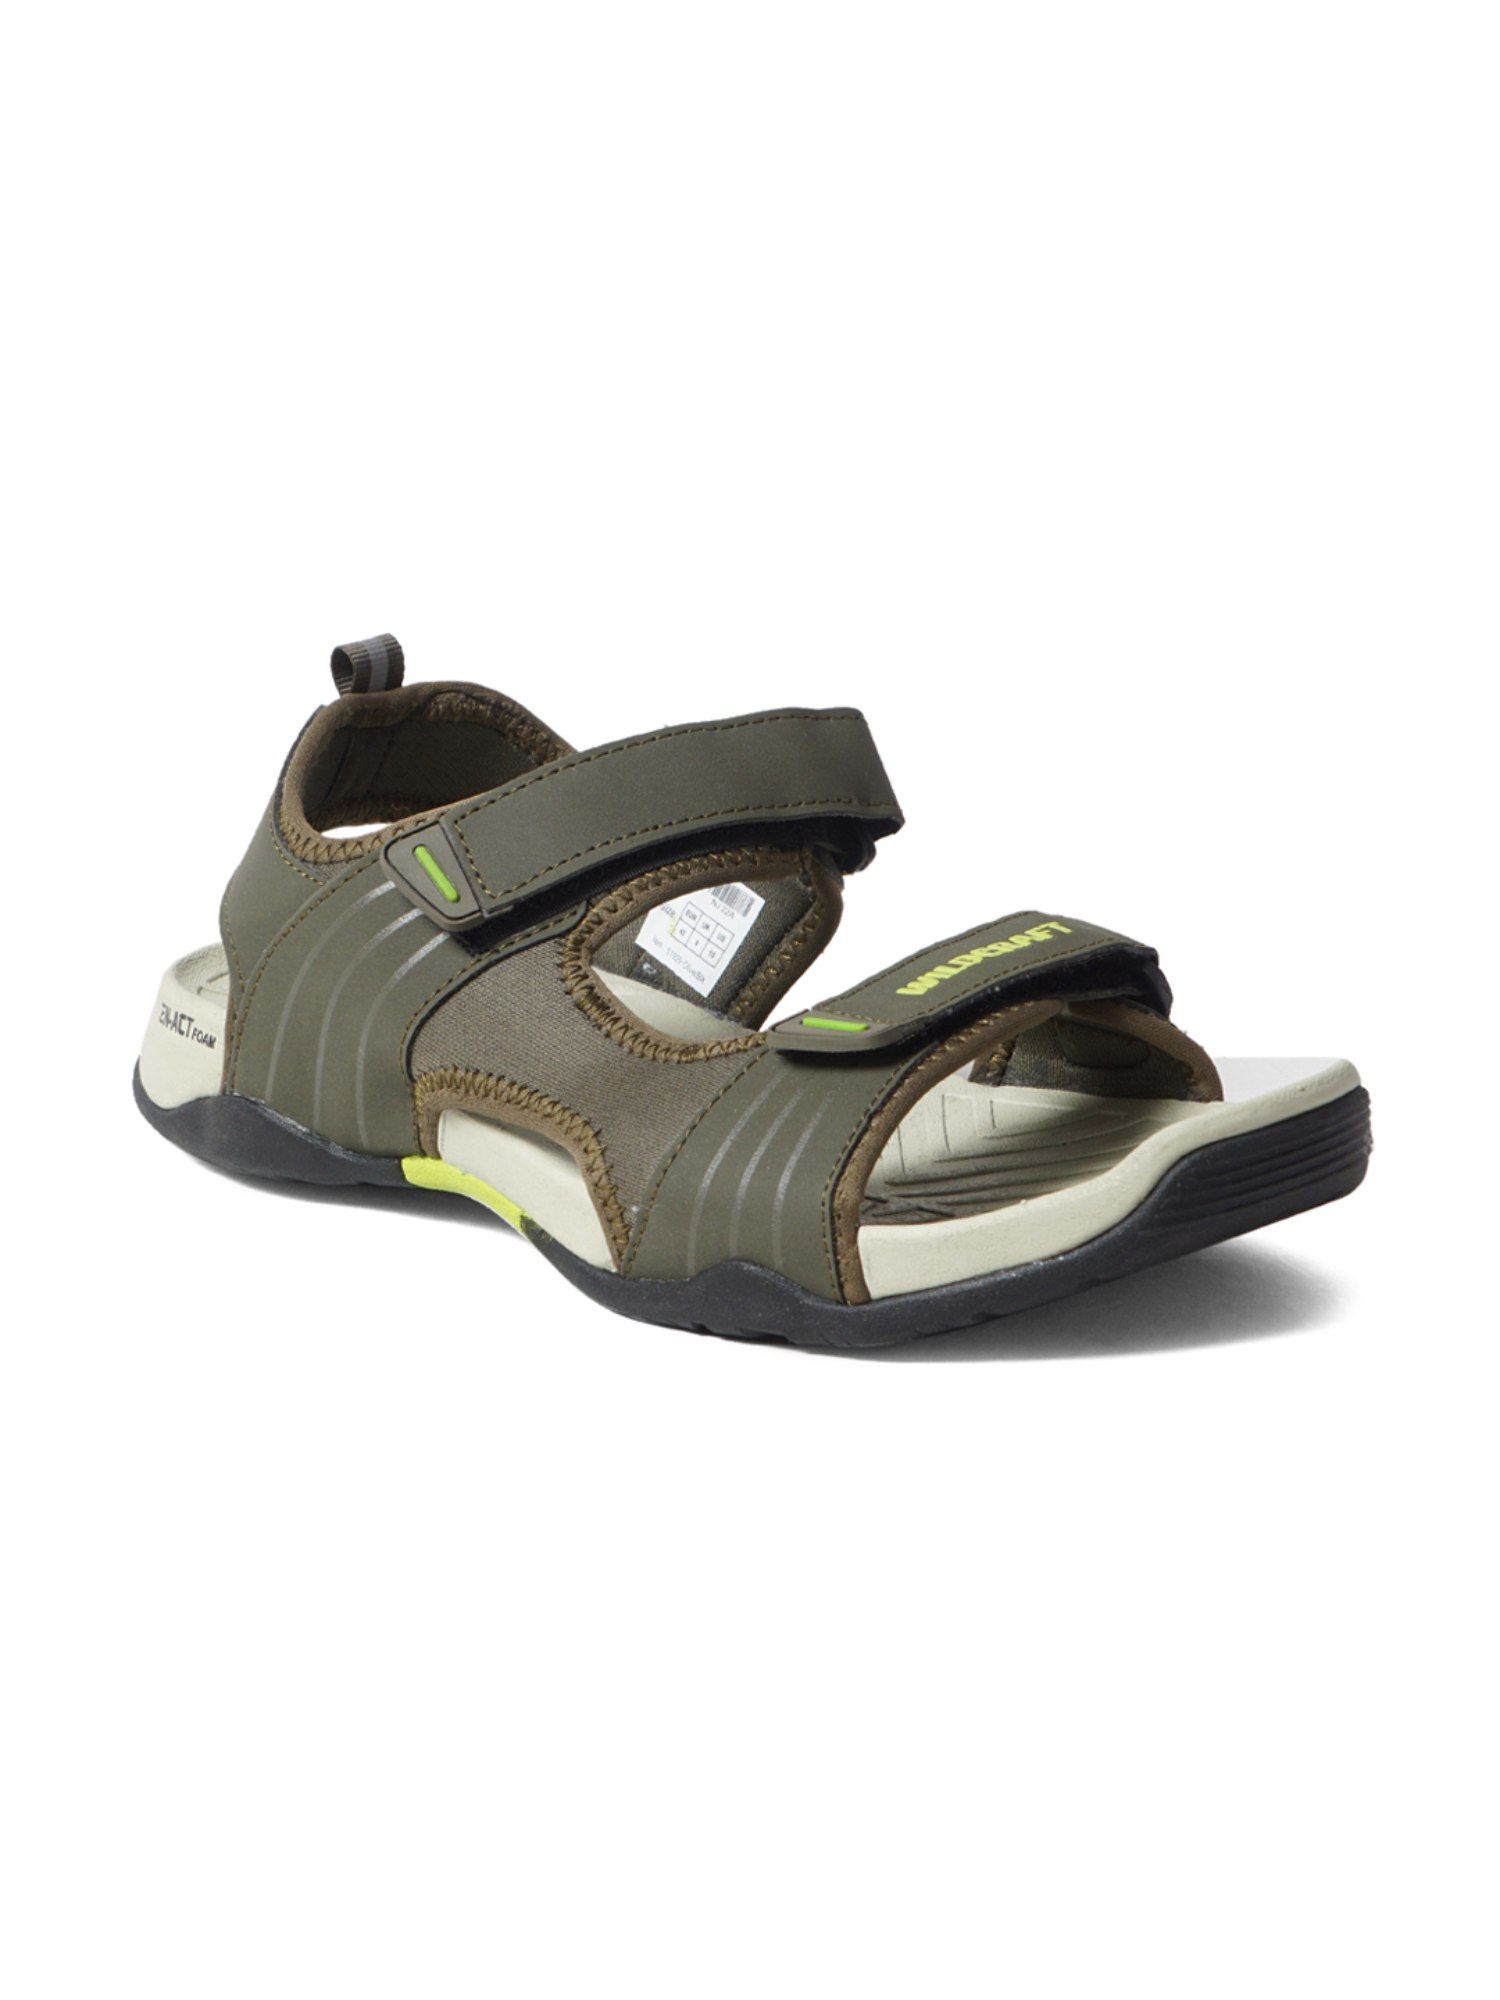 Wildcraft Sandals : Buy Wildcraft Men Swift Black Floater Sandals Online |  Nykaa Fashion